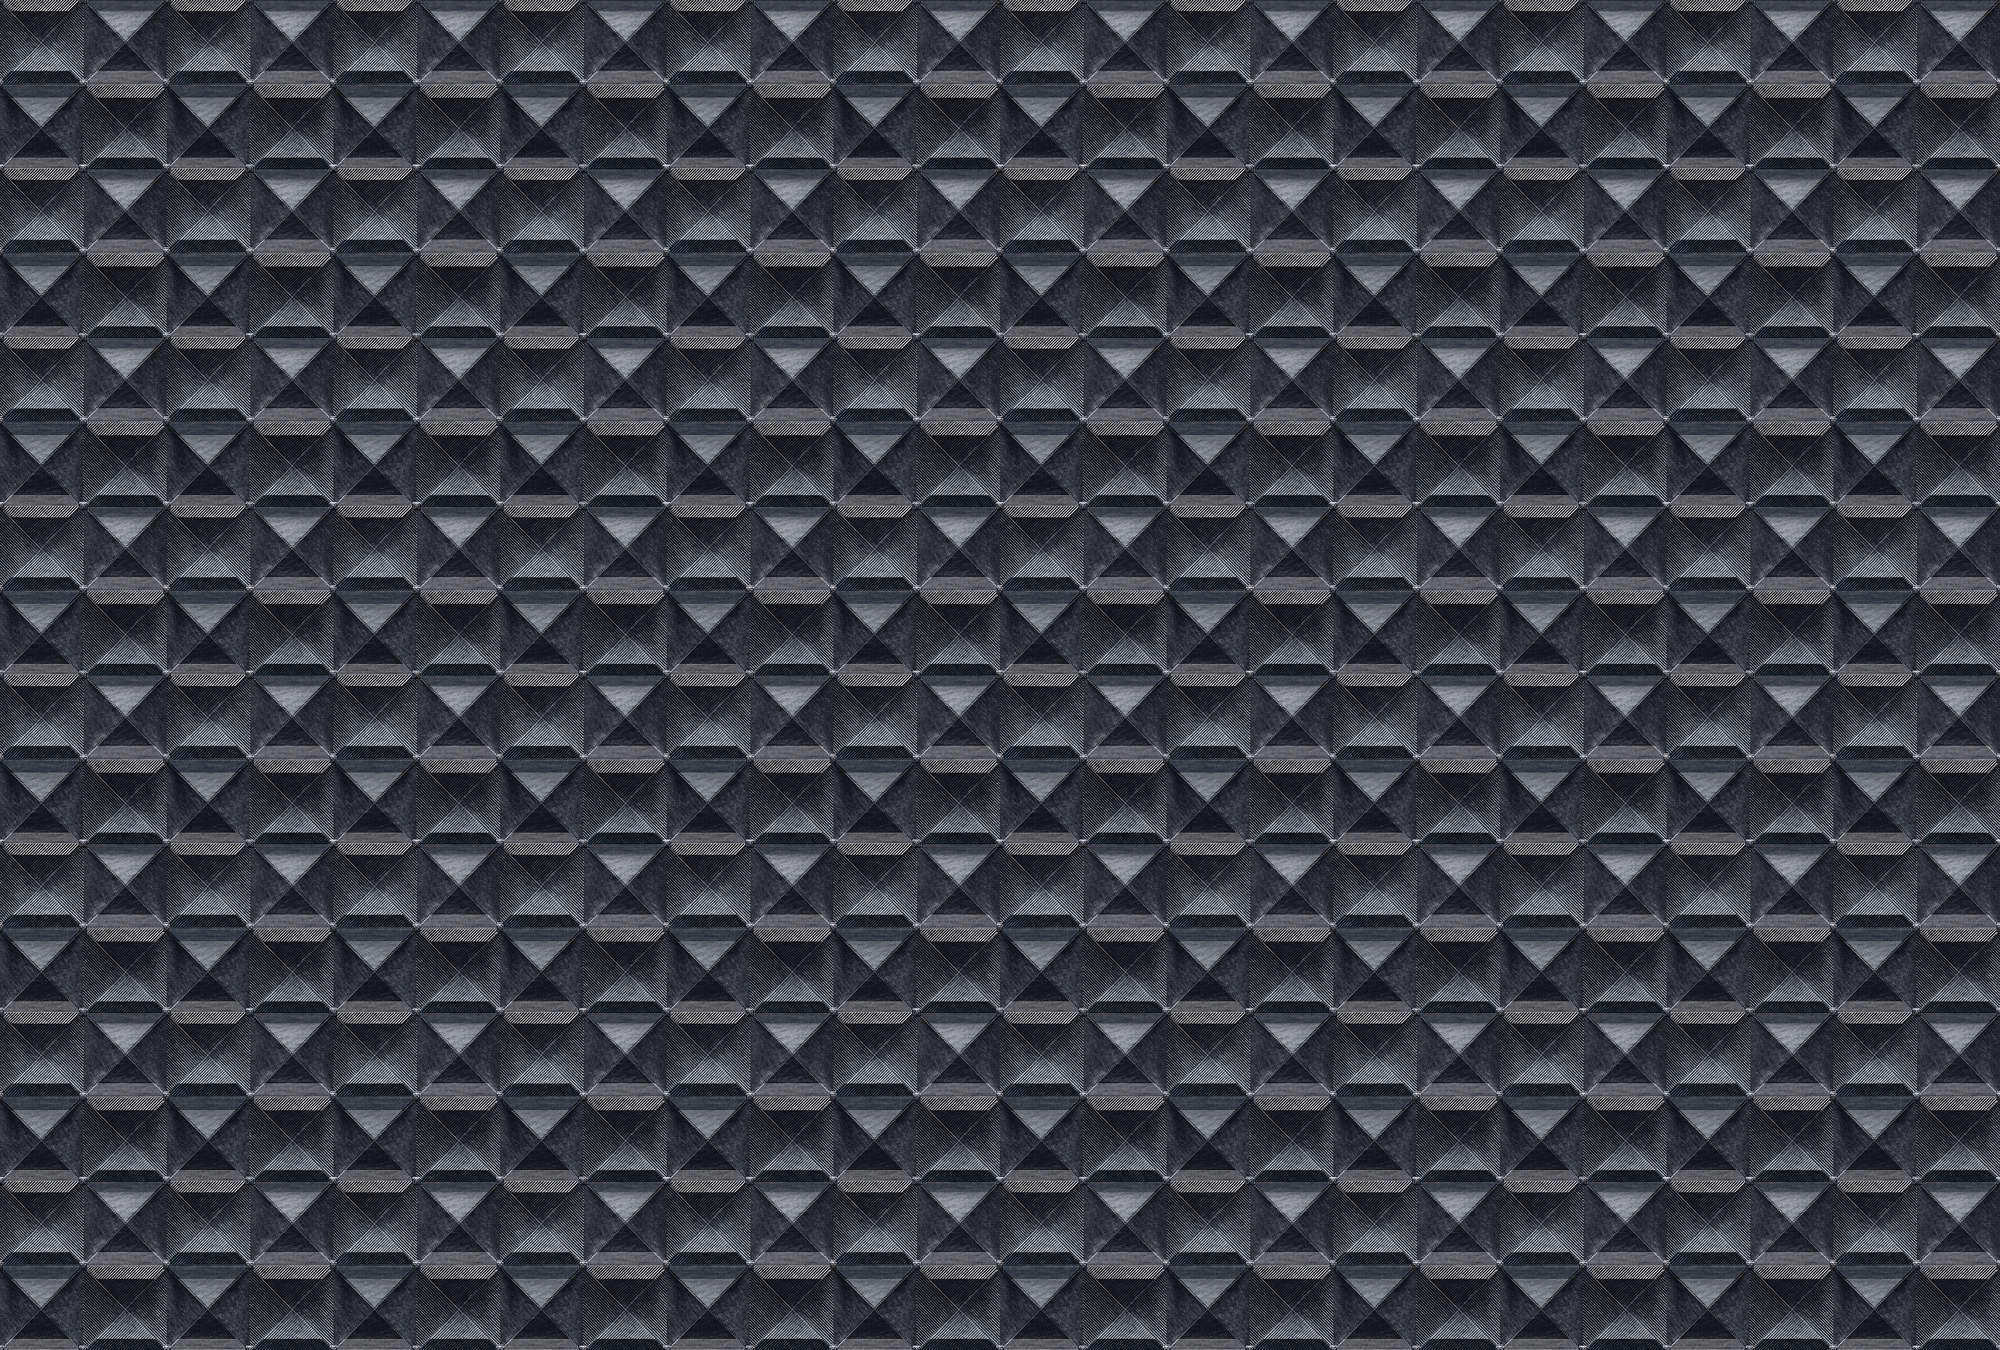             The edge 2 - Mural 3D con diseño de rombos metálicos - Azul, Negro | Tejido sin tejer texturado
        